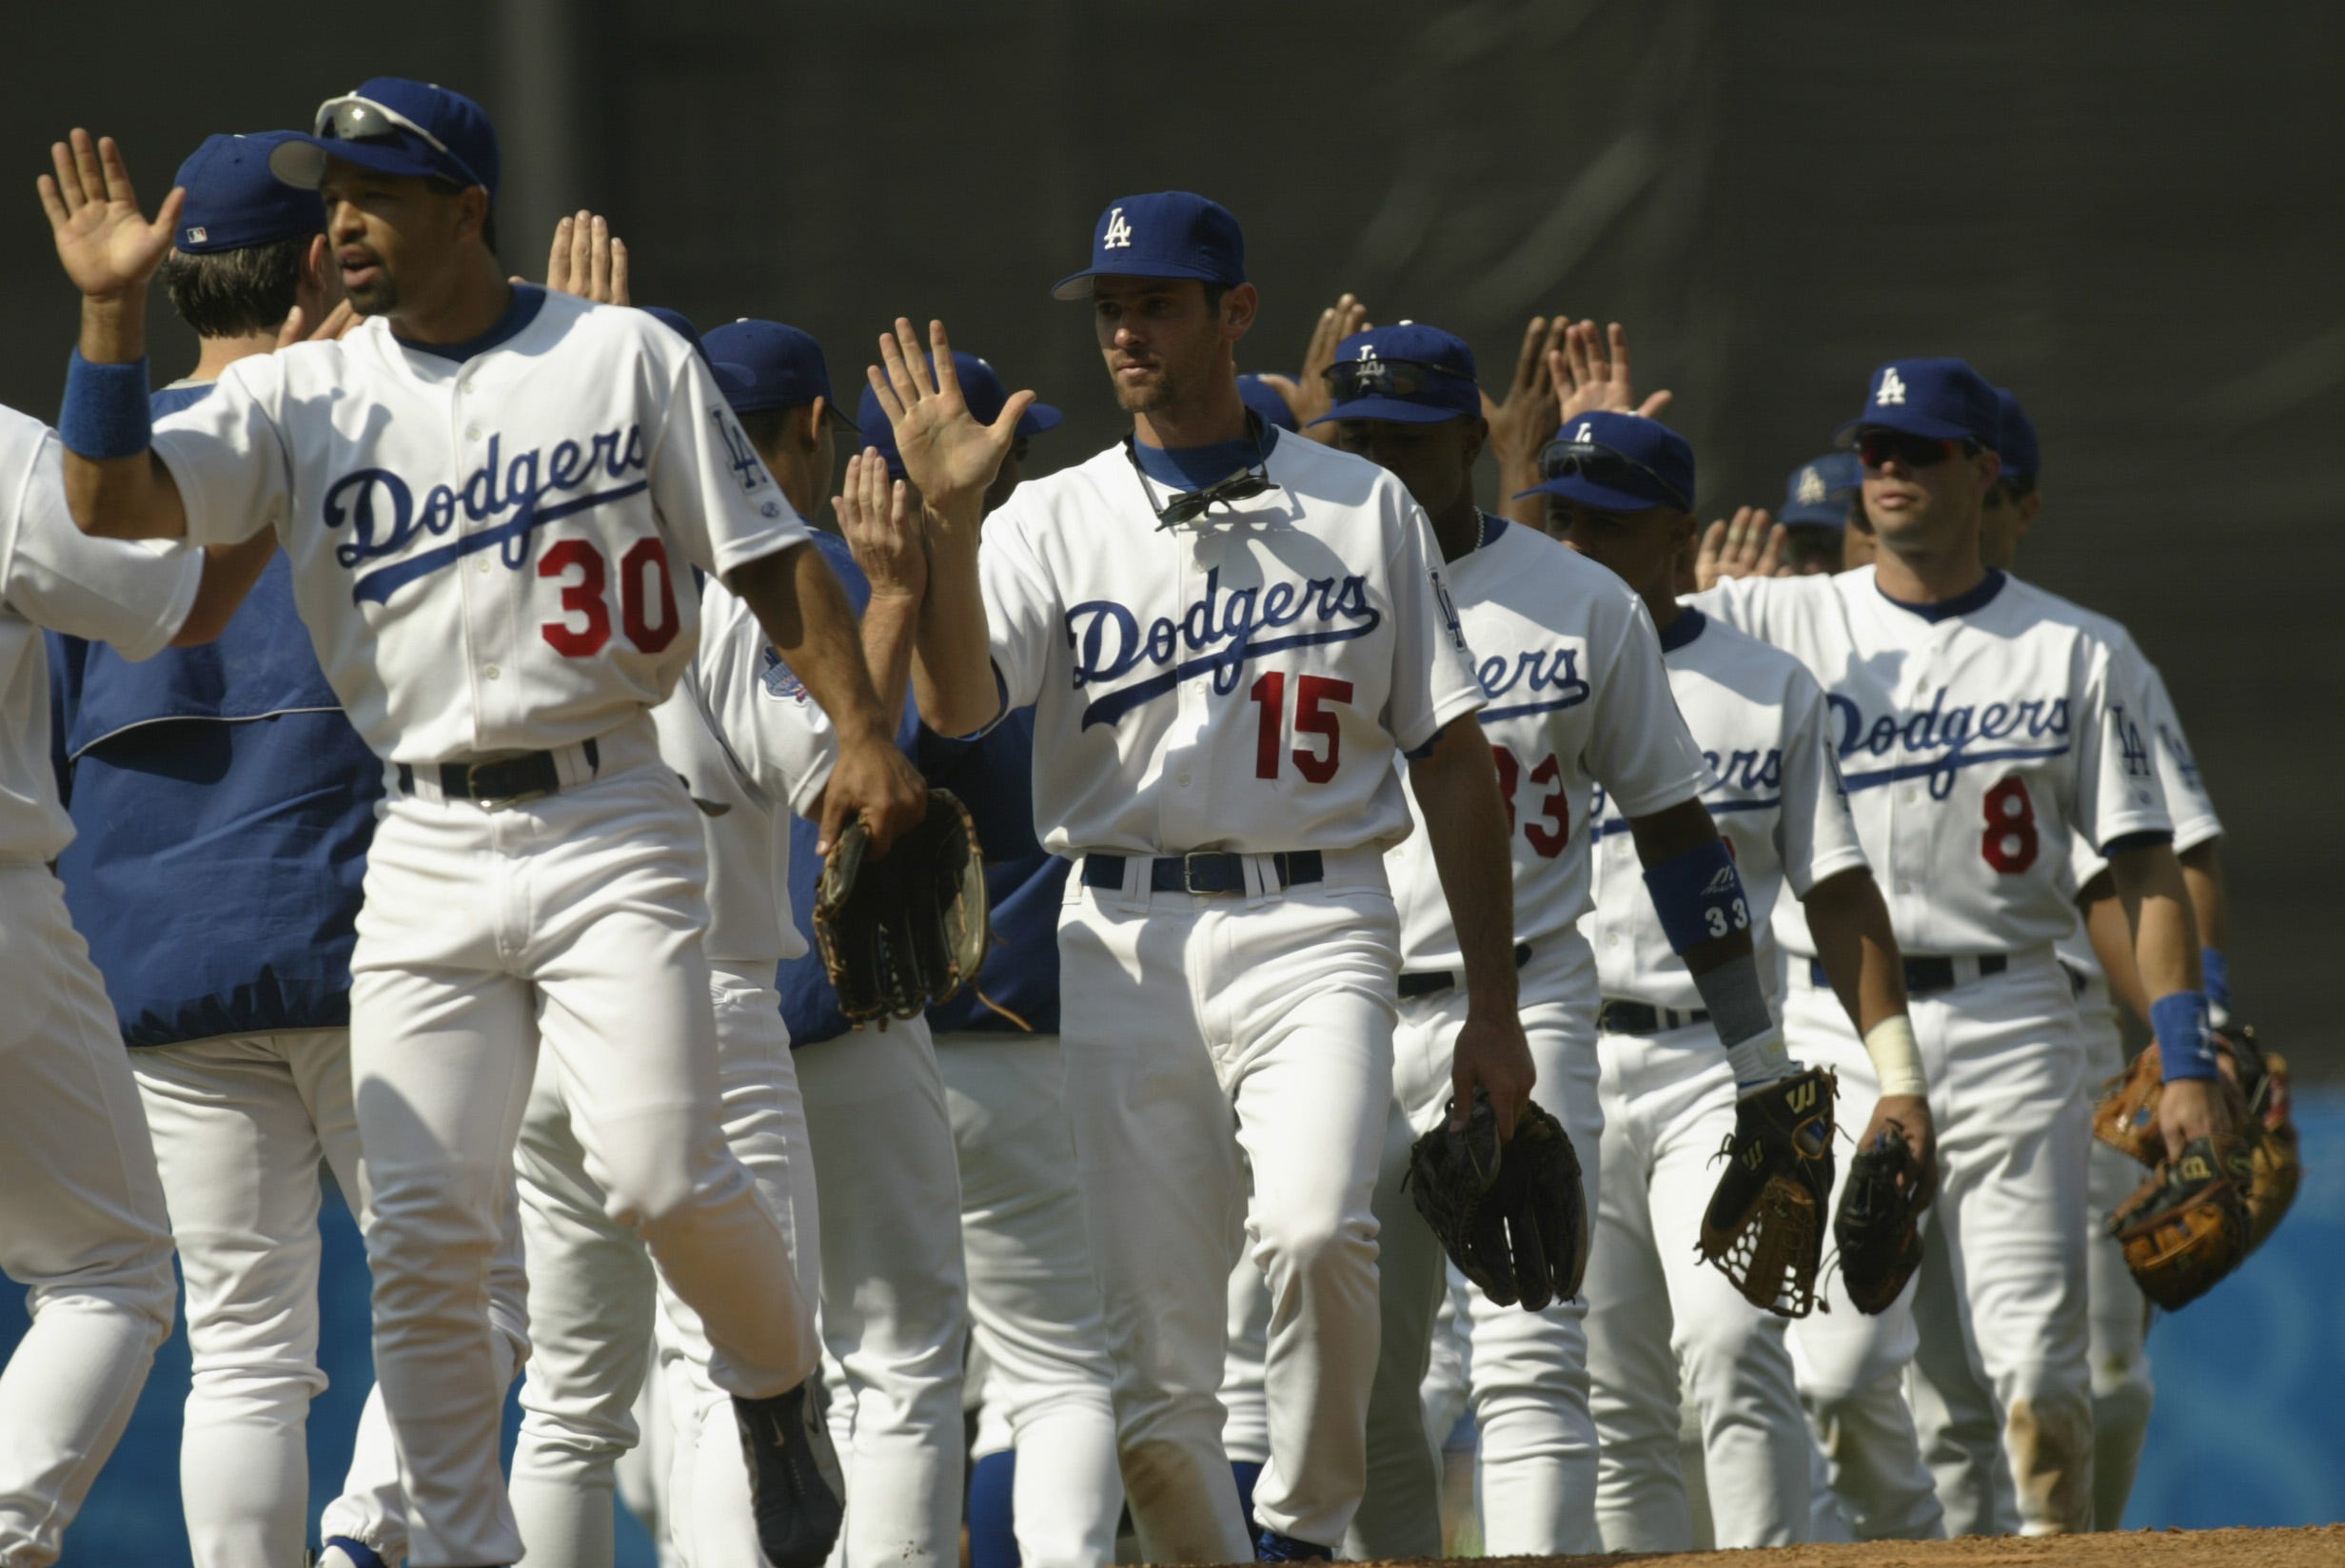 The Dodgers' history on their sleeve, by Cary Osborne